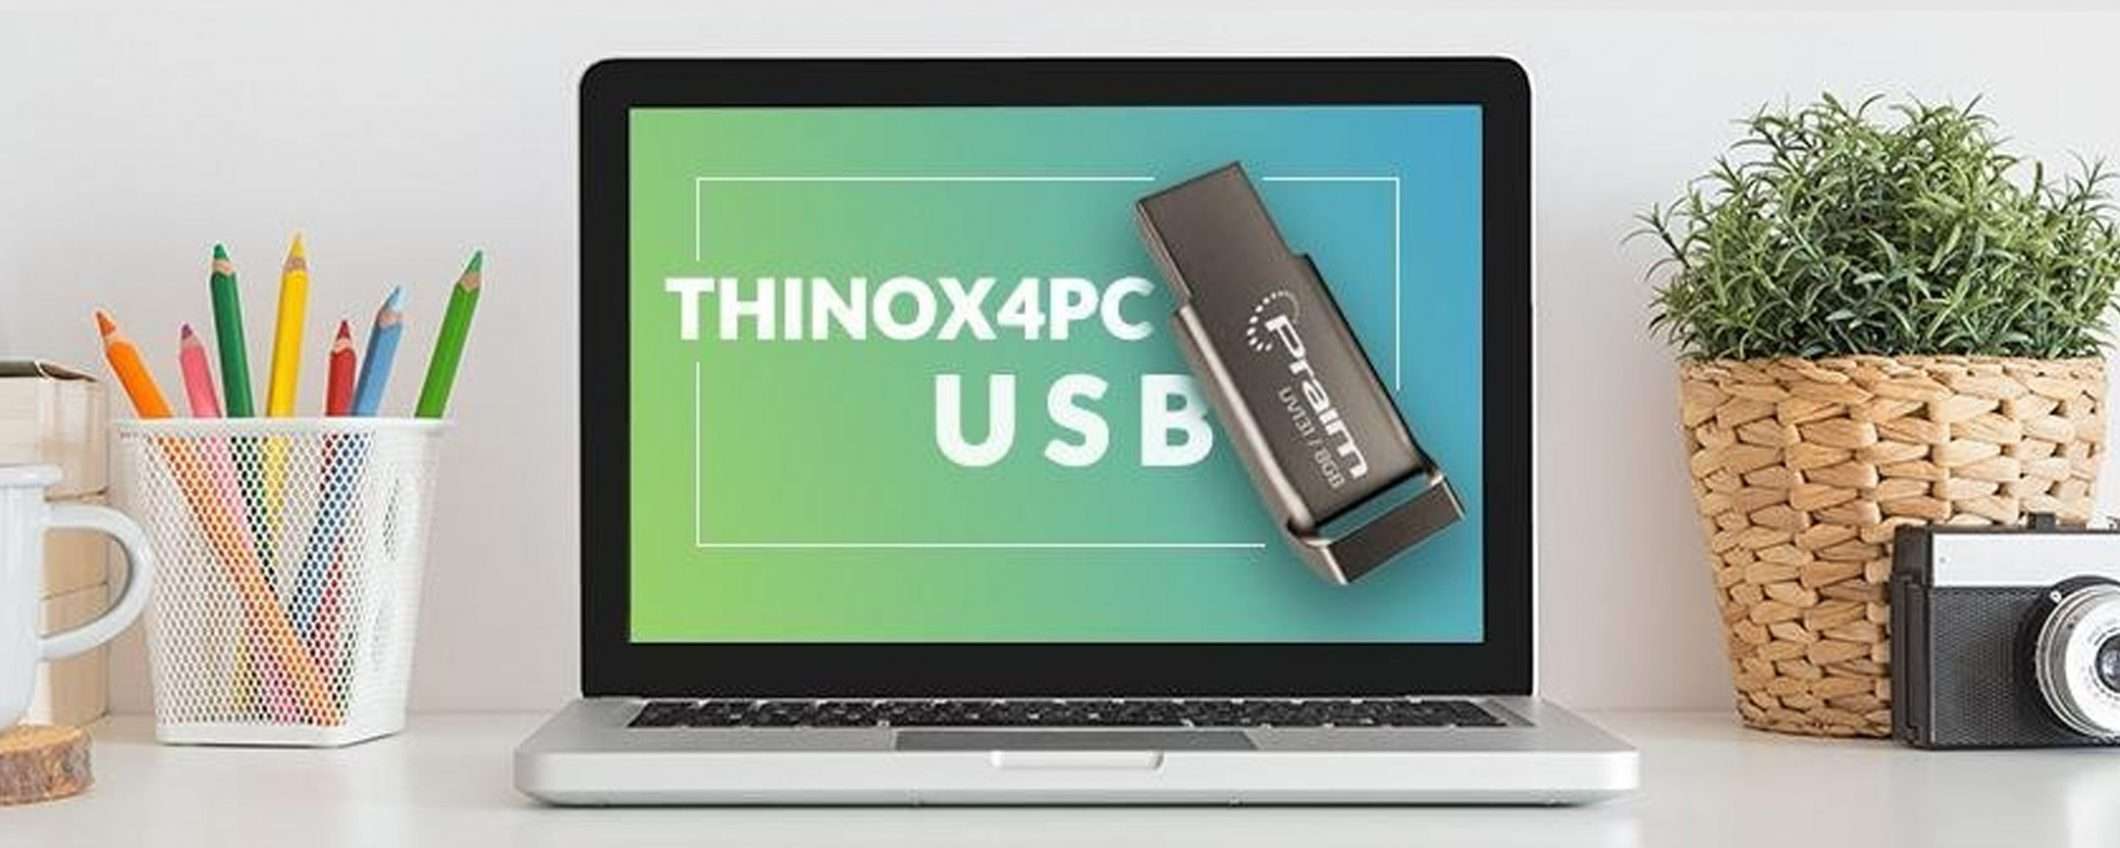 Praim ThinOX4PC USB, un device per lo smart working